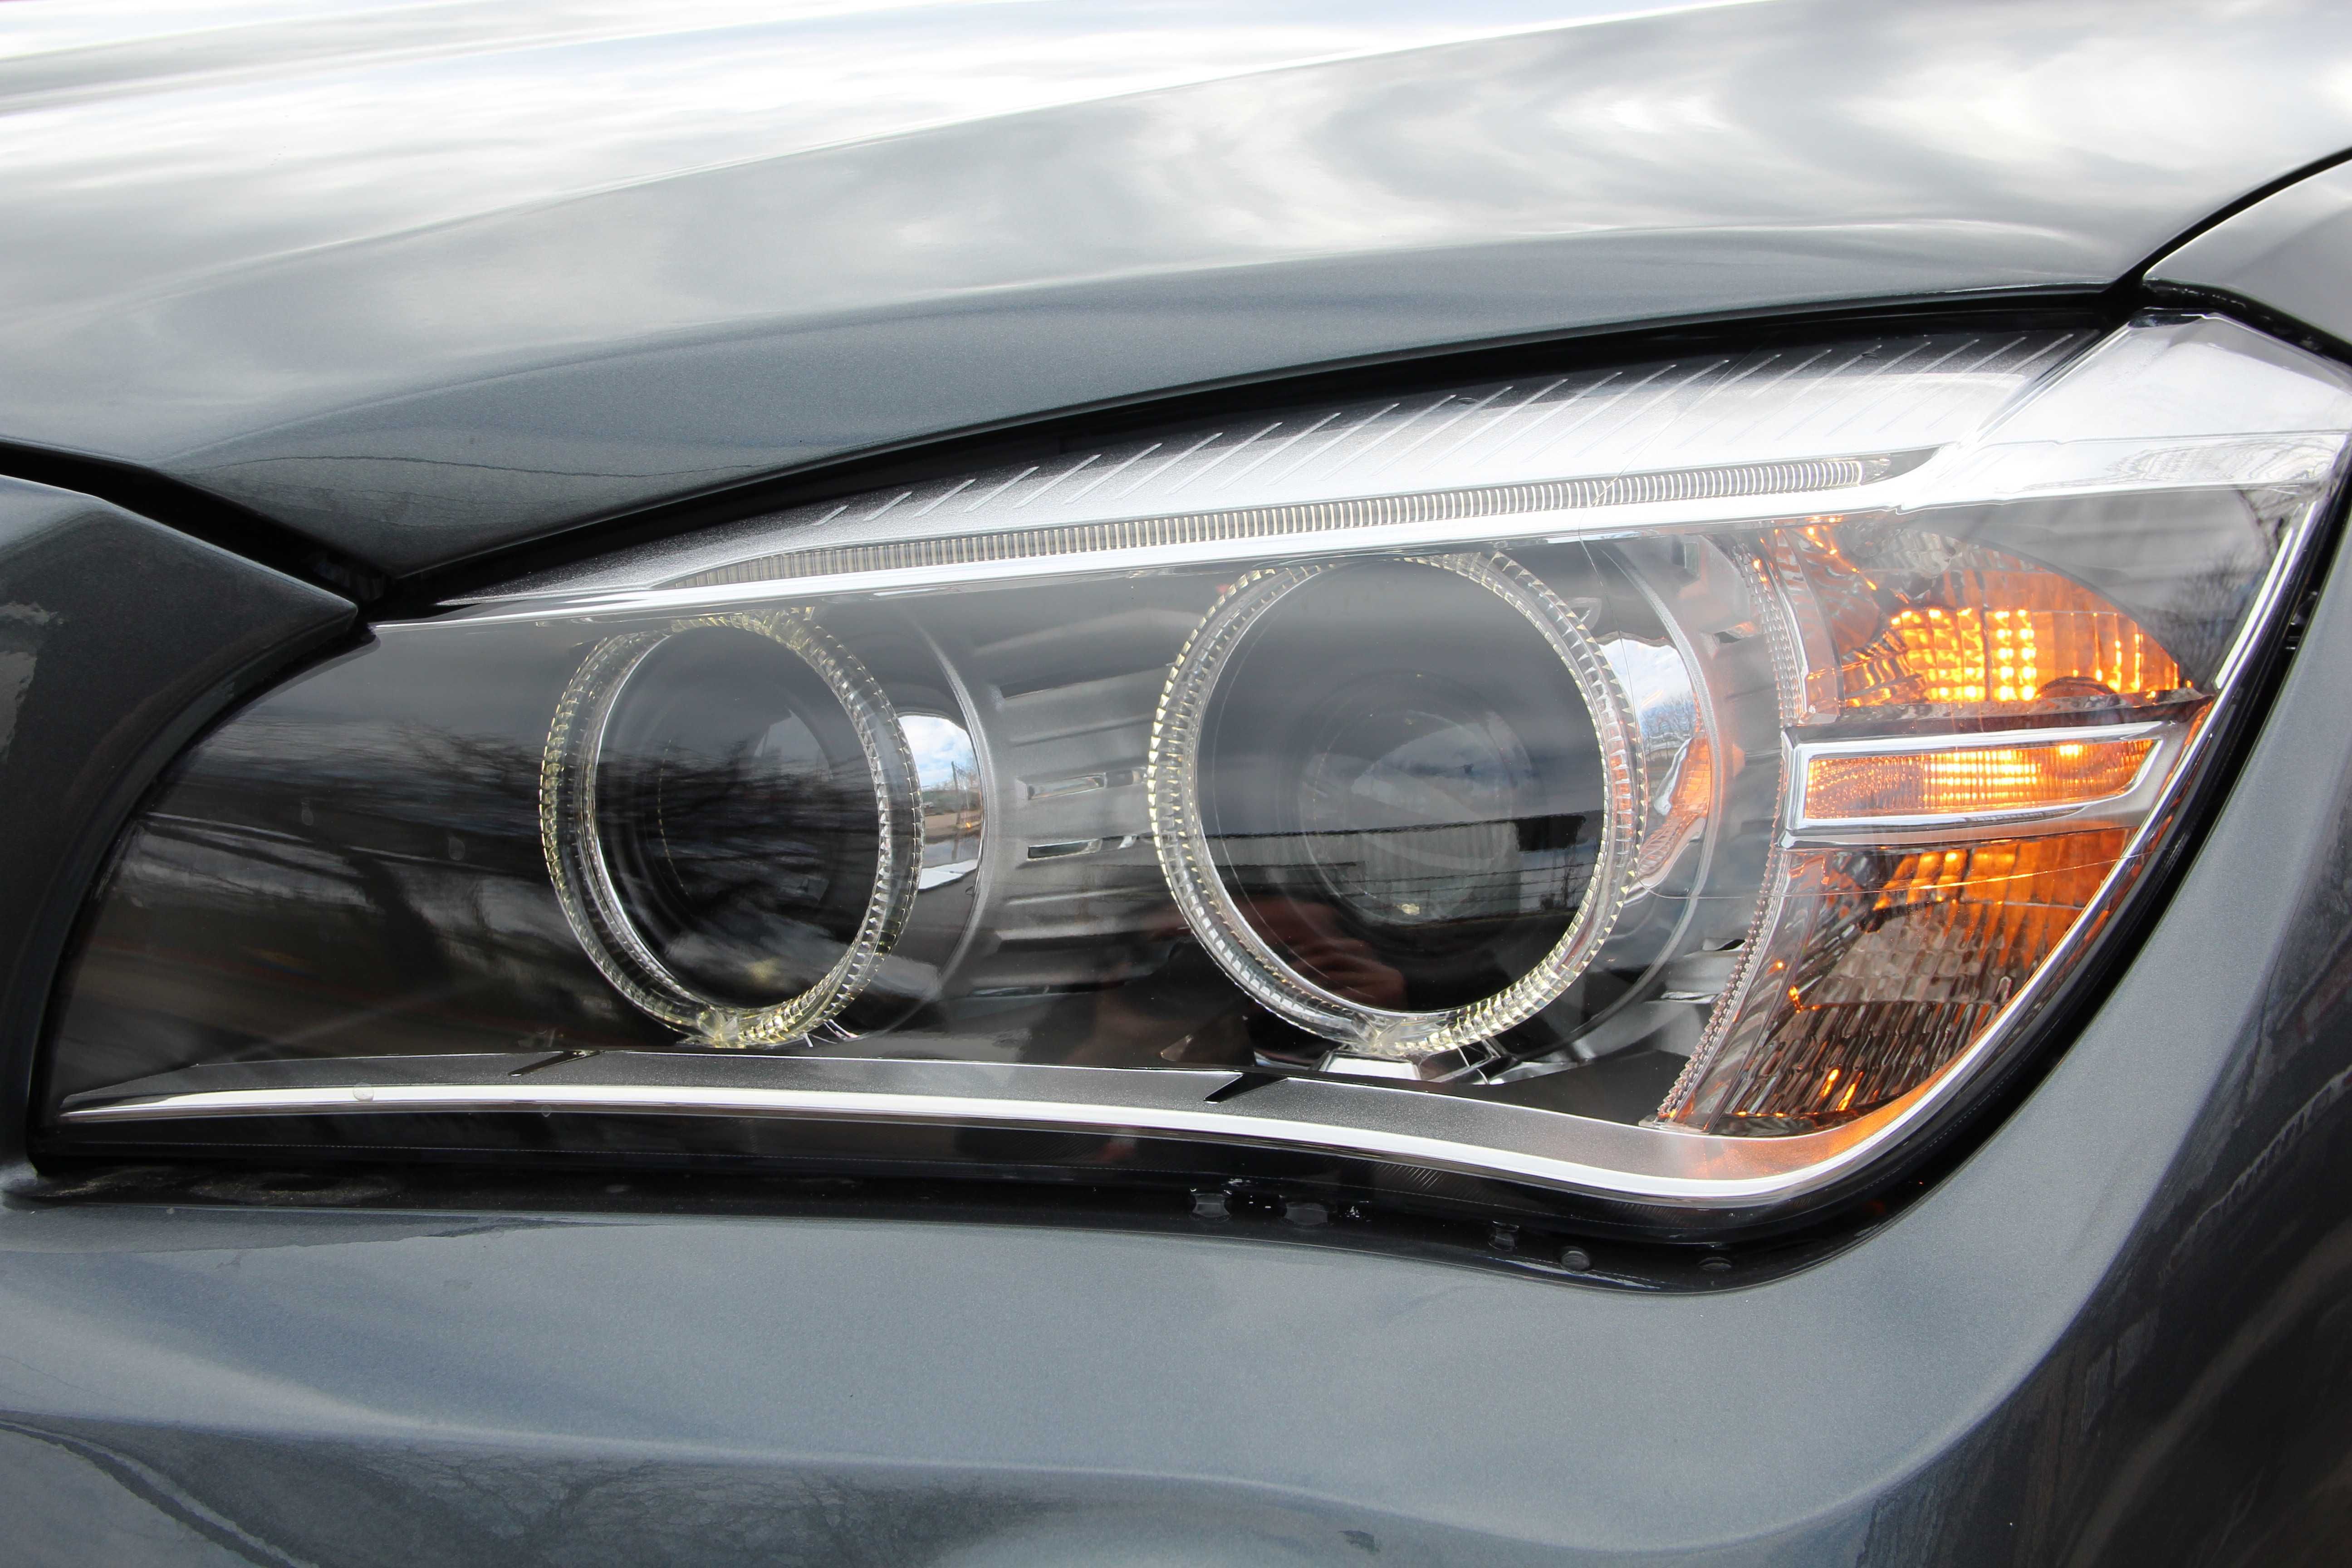 BMW X1 X Drive 28i , 2014 , 2.0 битурбо, бензин, полный привод, БМВ Х1